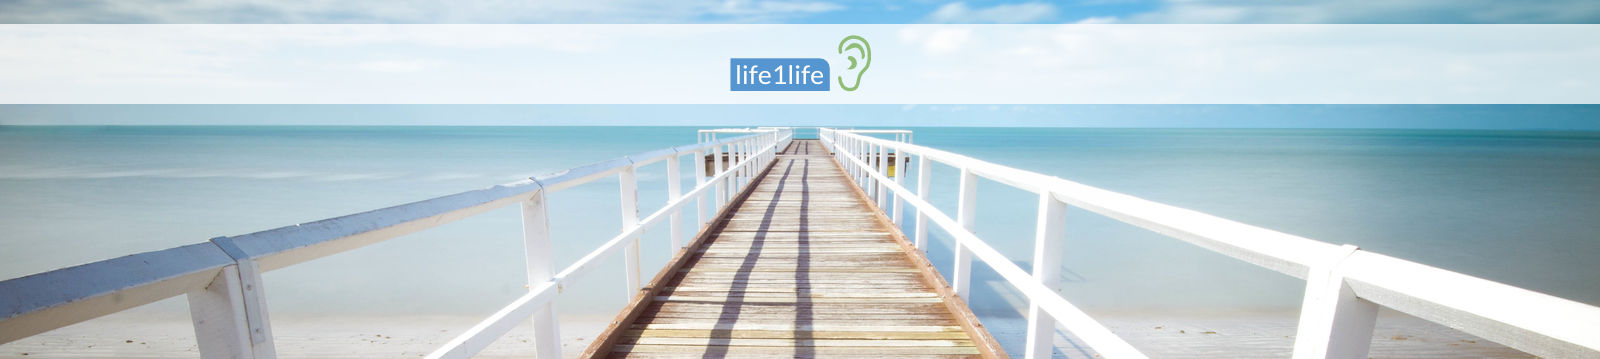 life1life-header-page